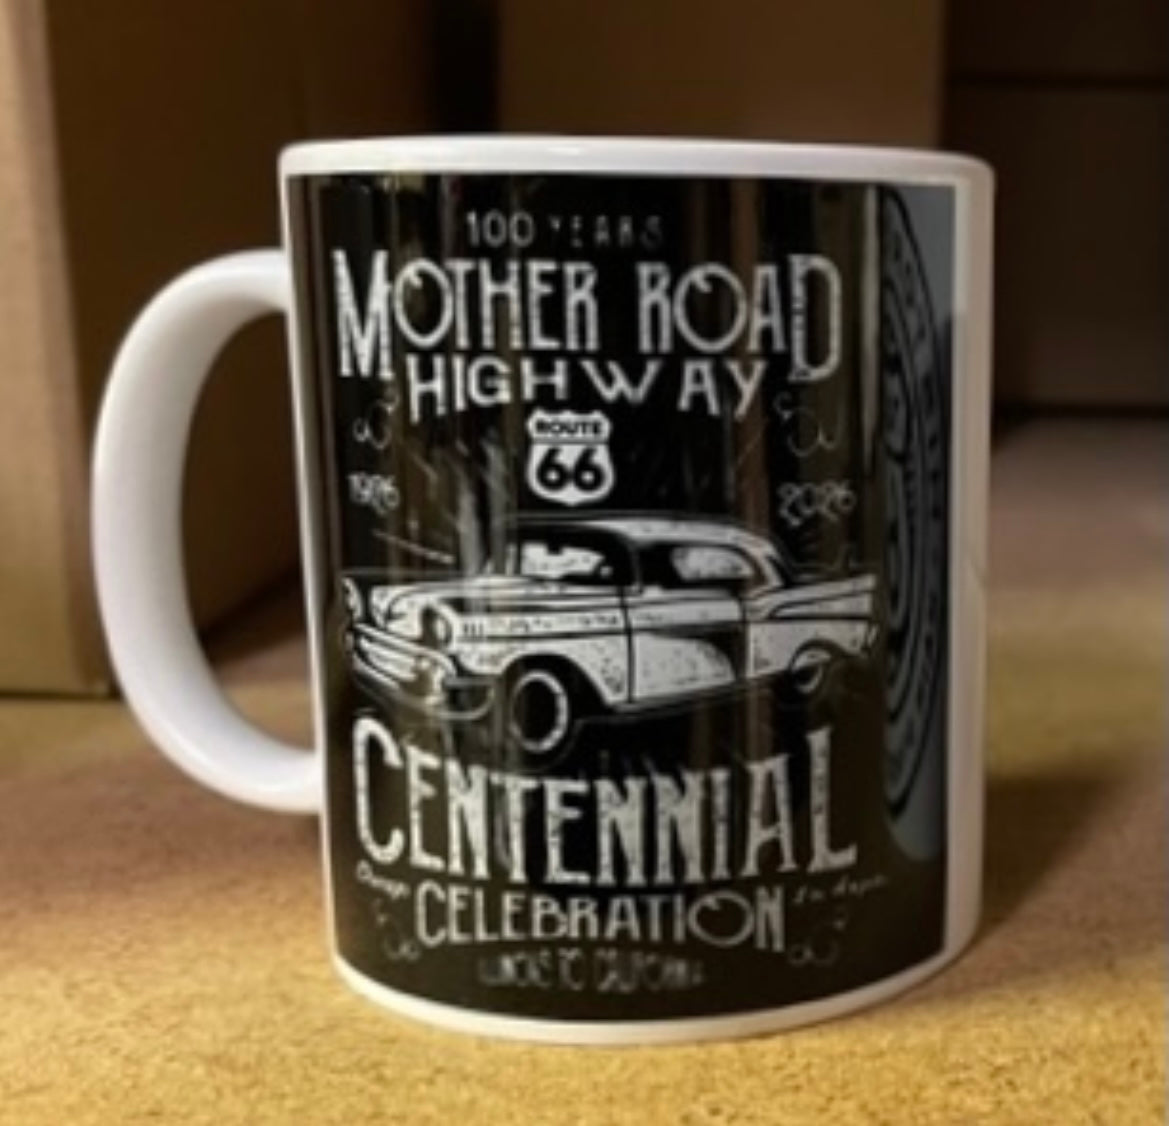 Mother Road Highway Centennial Celebration Mug